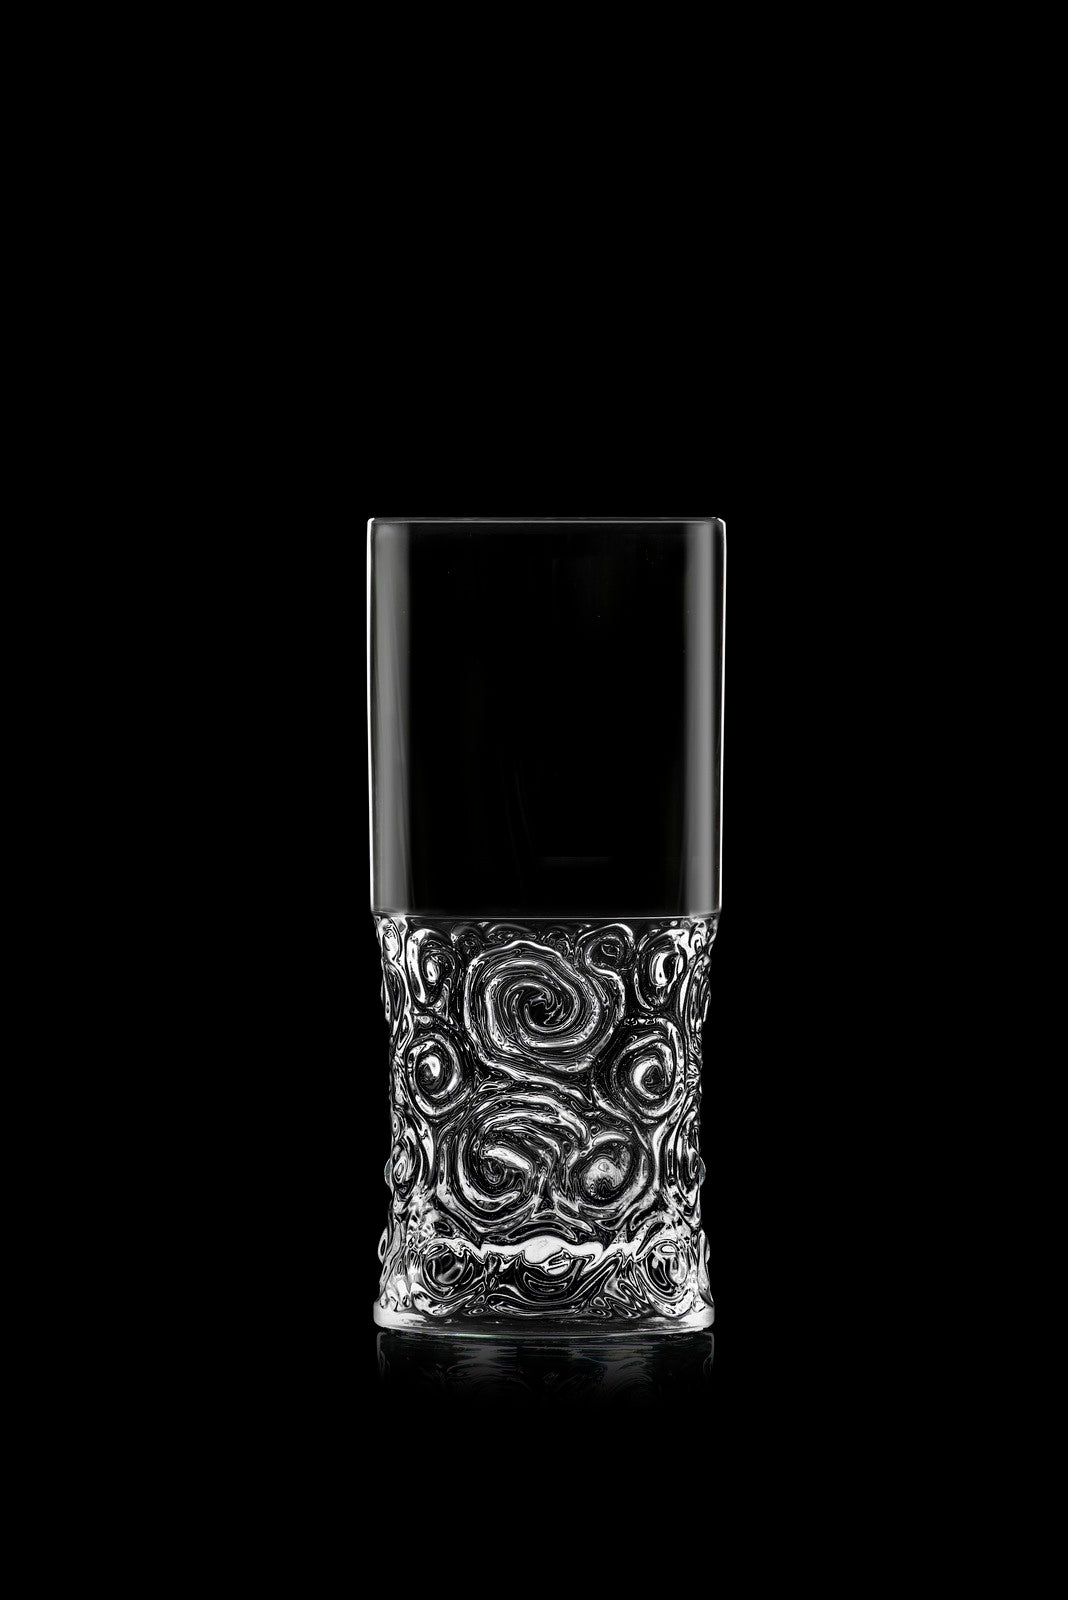 immagine-2-rcr-cristalleria-italiana-soul-hb-set-da-6-bicchieri-long-drink-in-vetro-ean-8007815269815